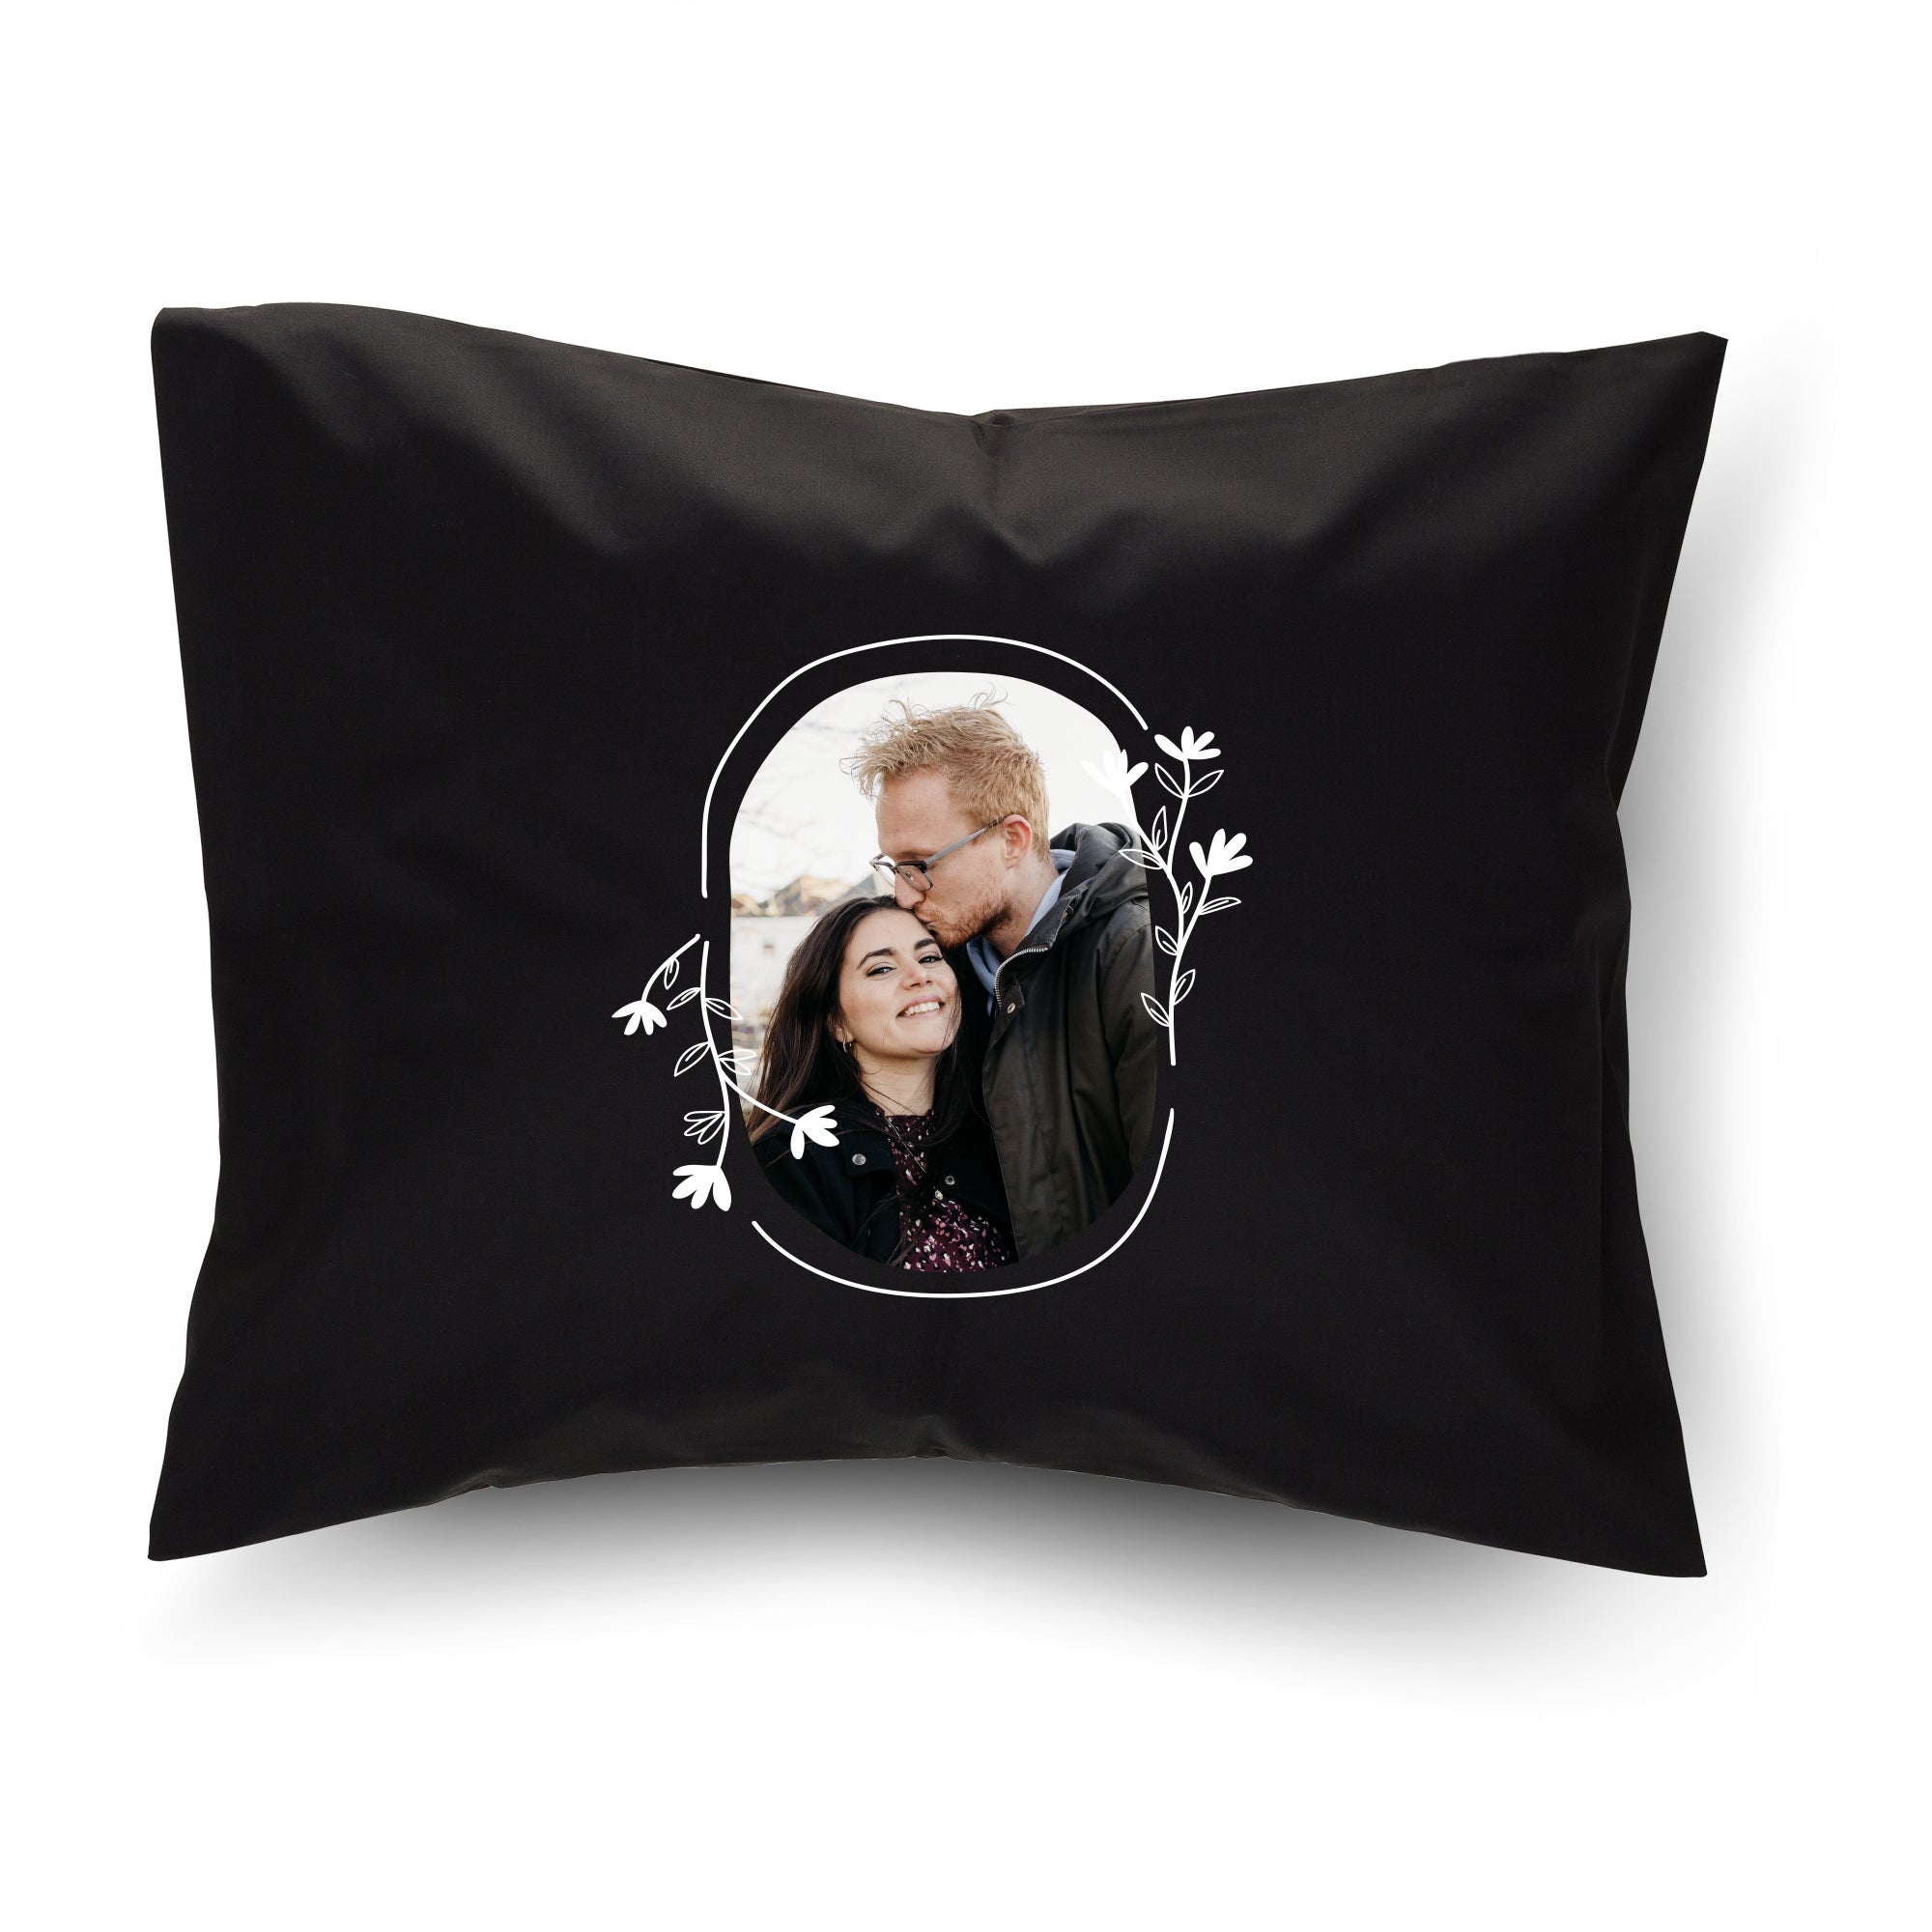 Personalised cushion cover - Black- 50 x 60 cm